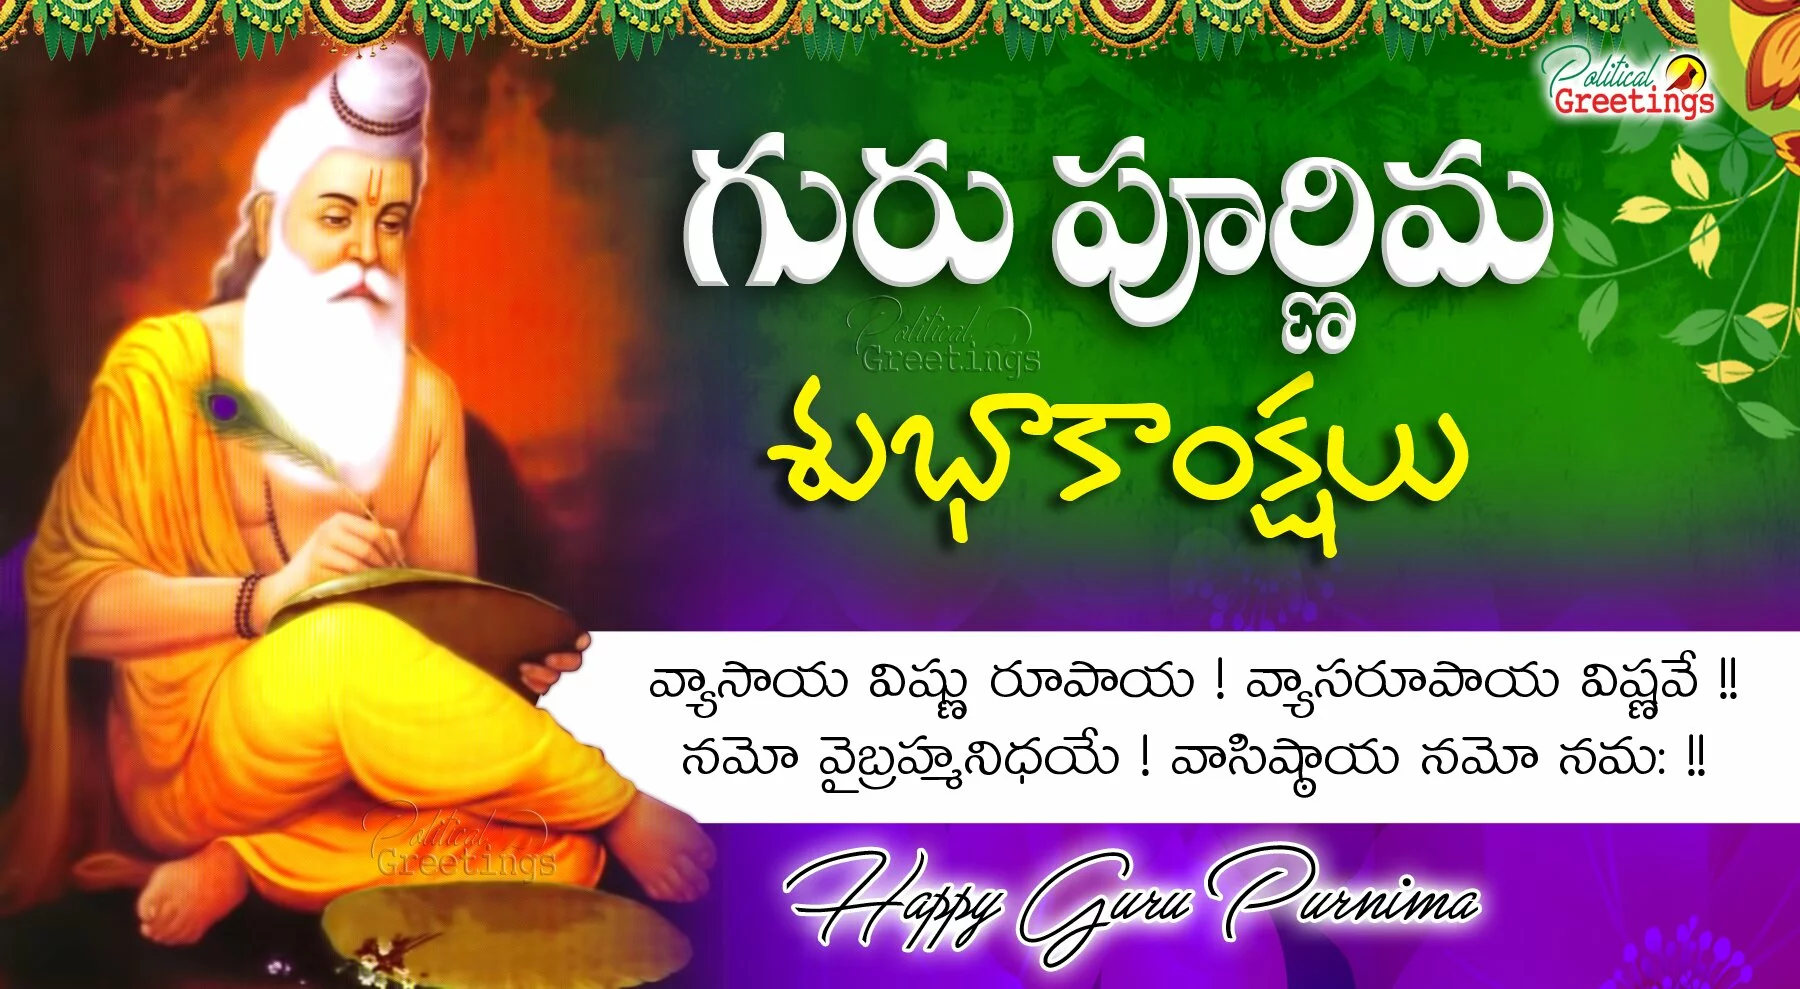 GuruPurnima 2017 Telugu slokams greetings Quotations wishes